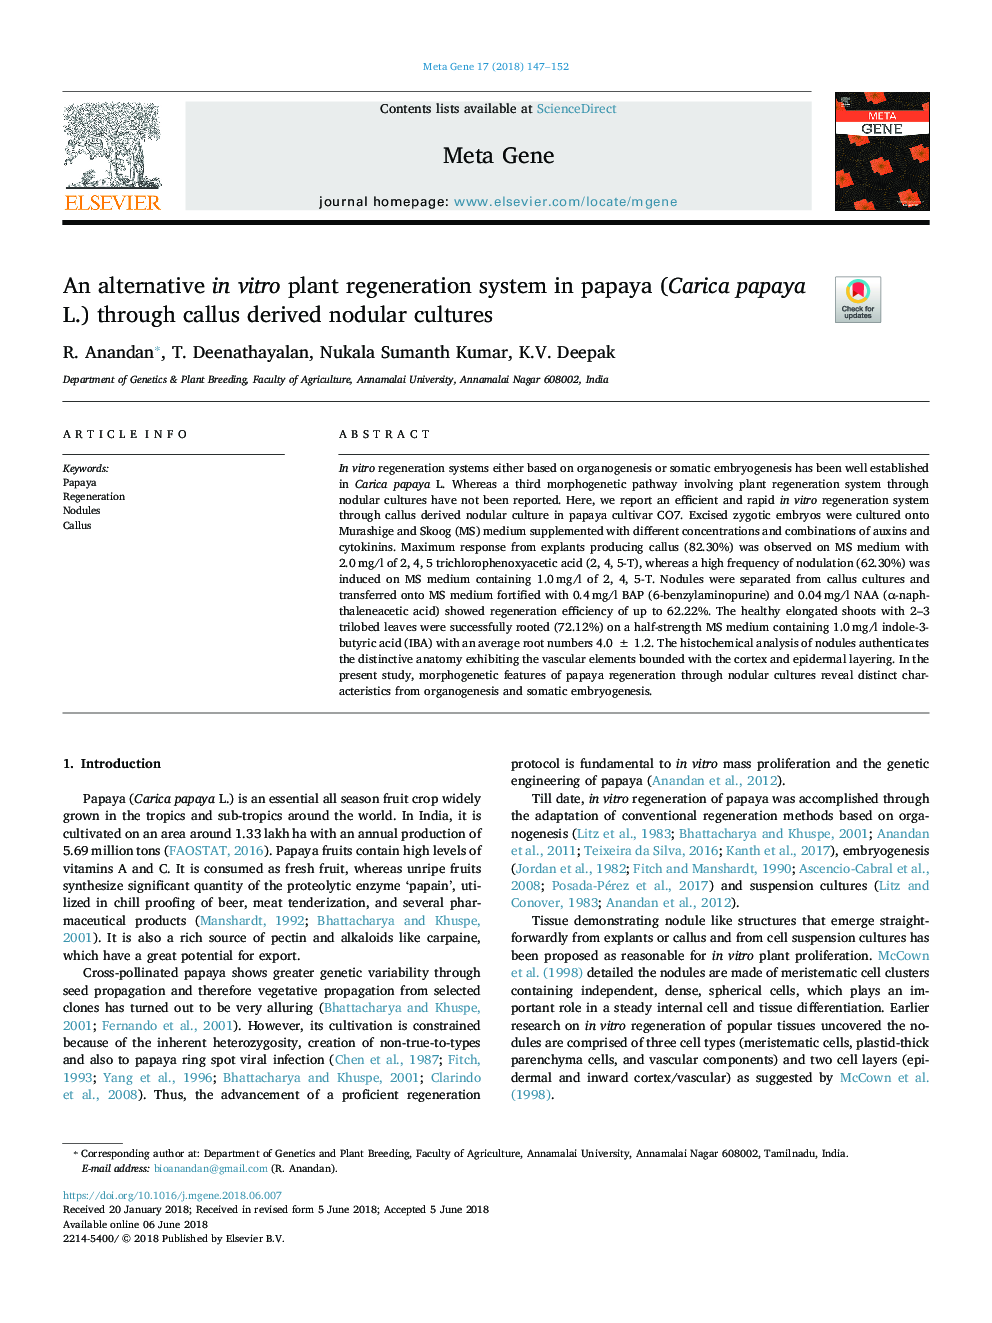 An alternative in vitro plant regeneration system in papaya (Carica papaya L.) through callus derived nodular cultures